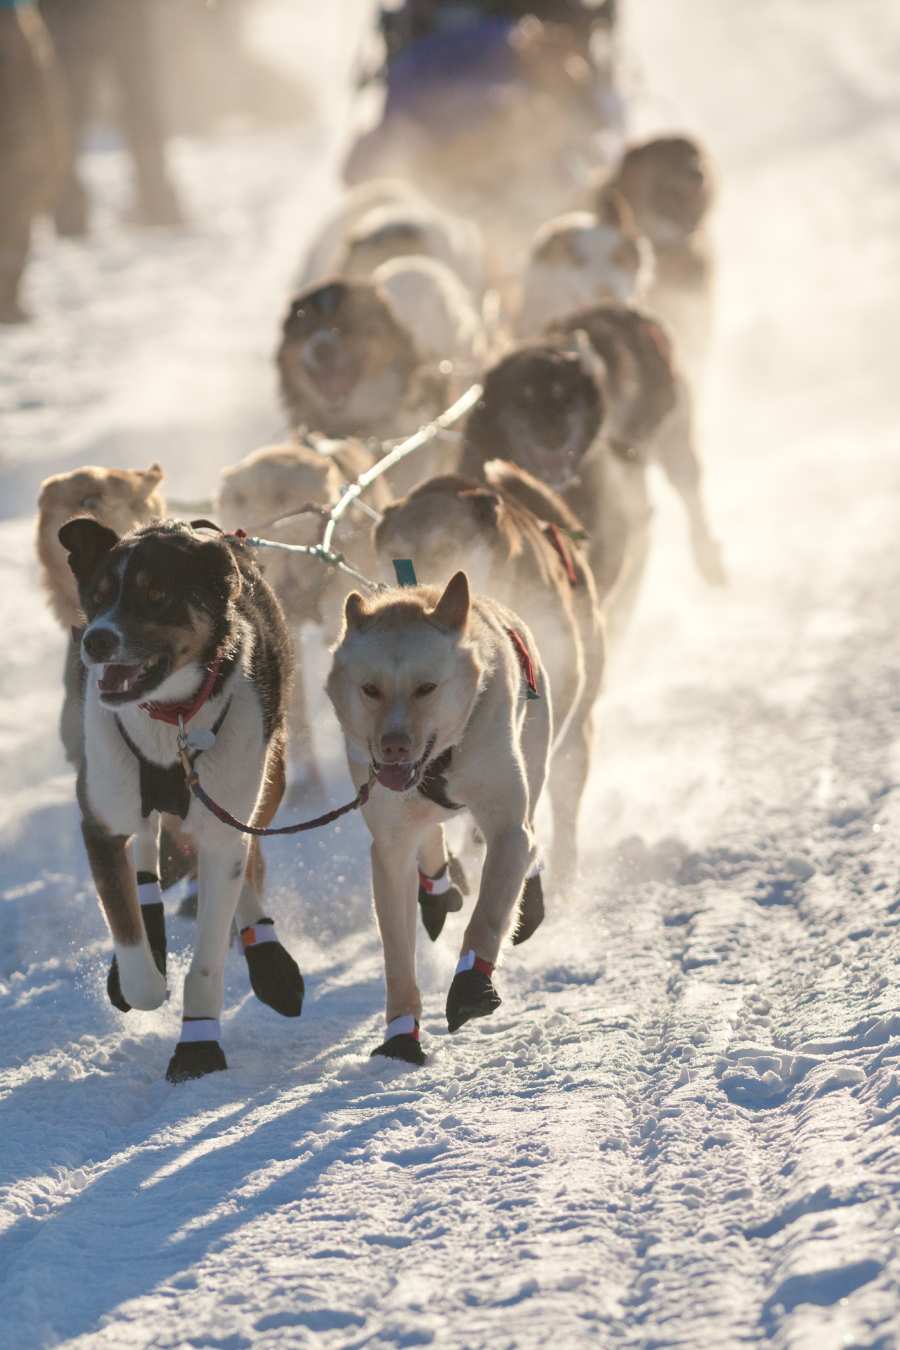 Sled dogs in Alaska pulling sled in winter snow